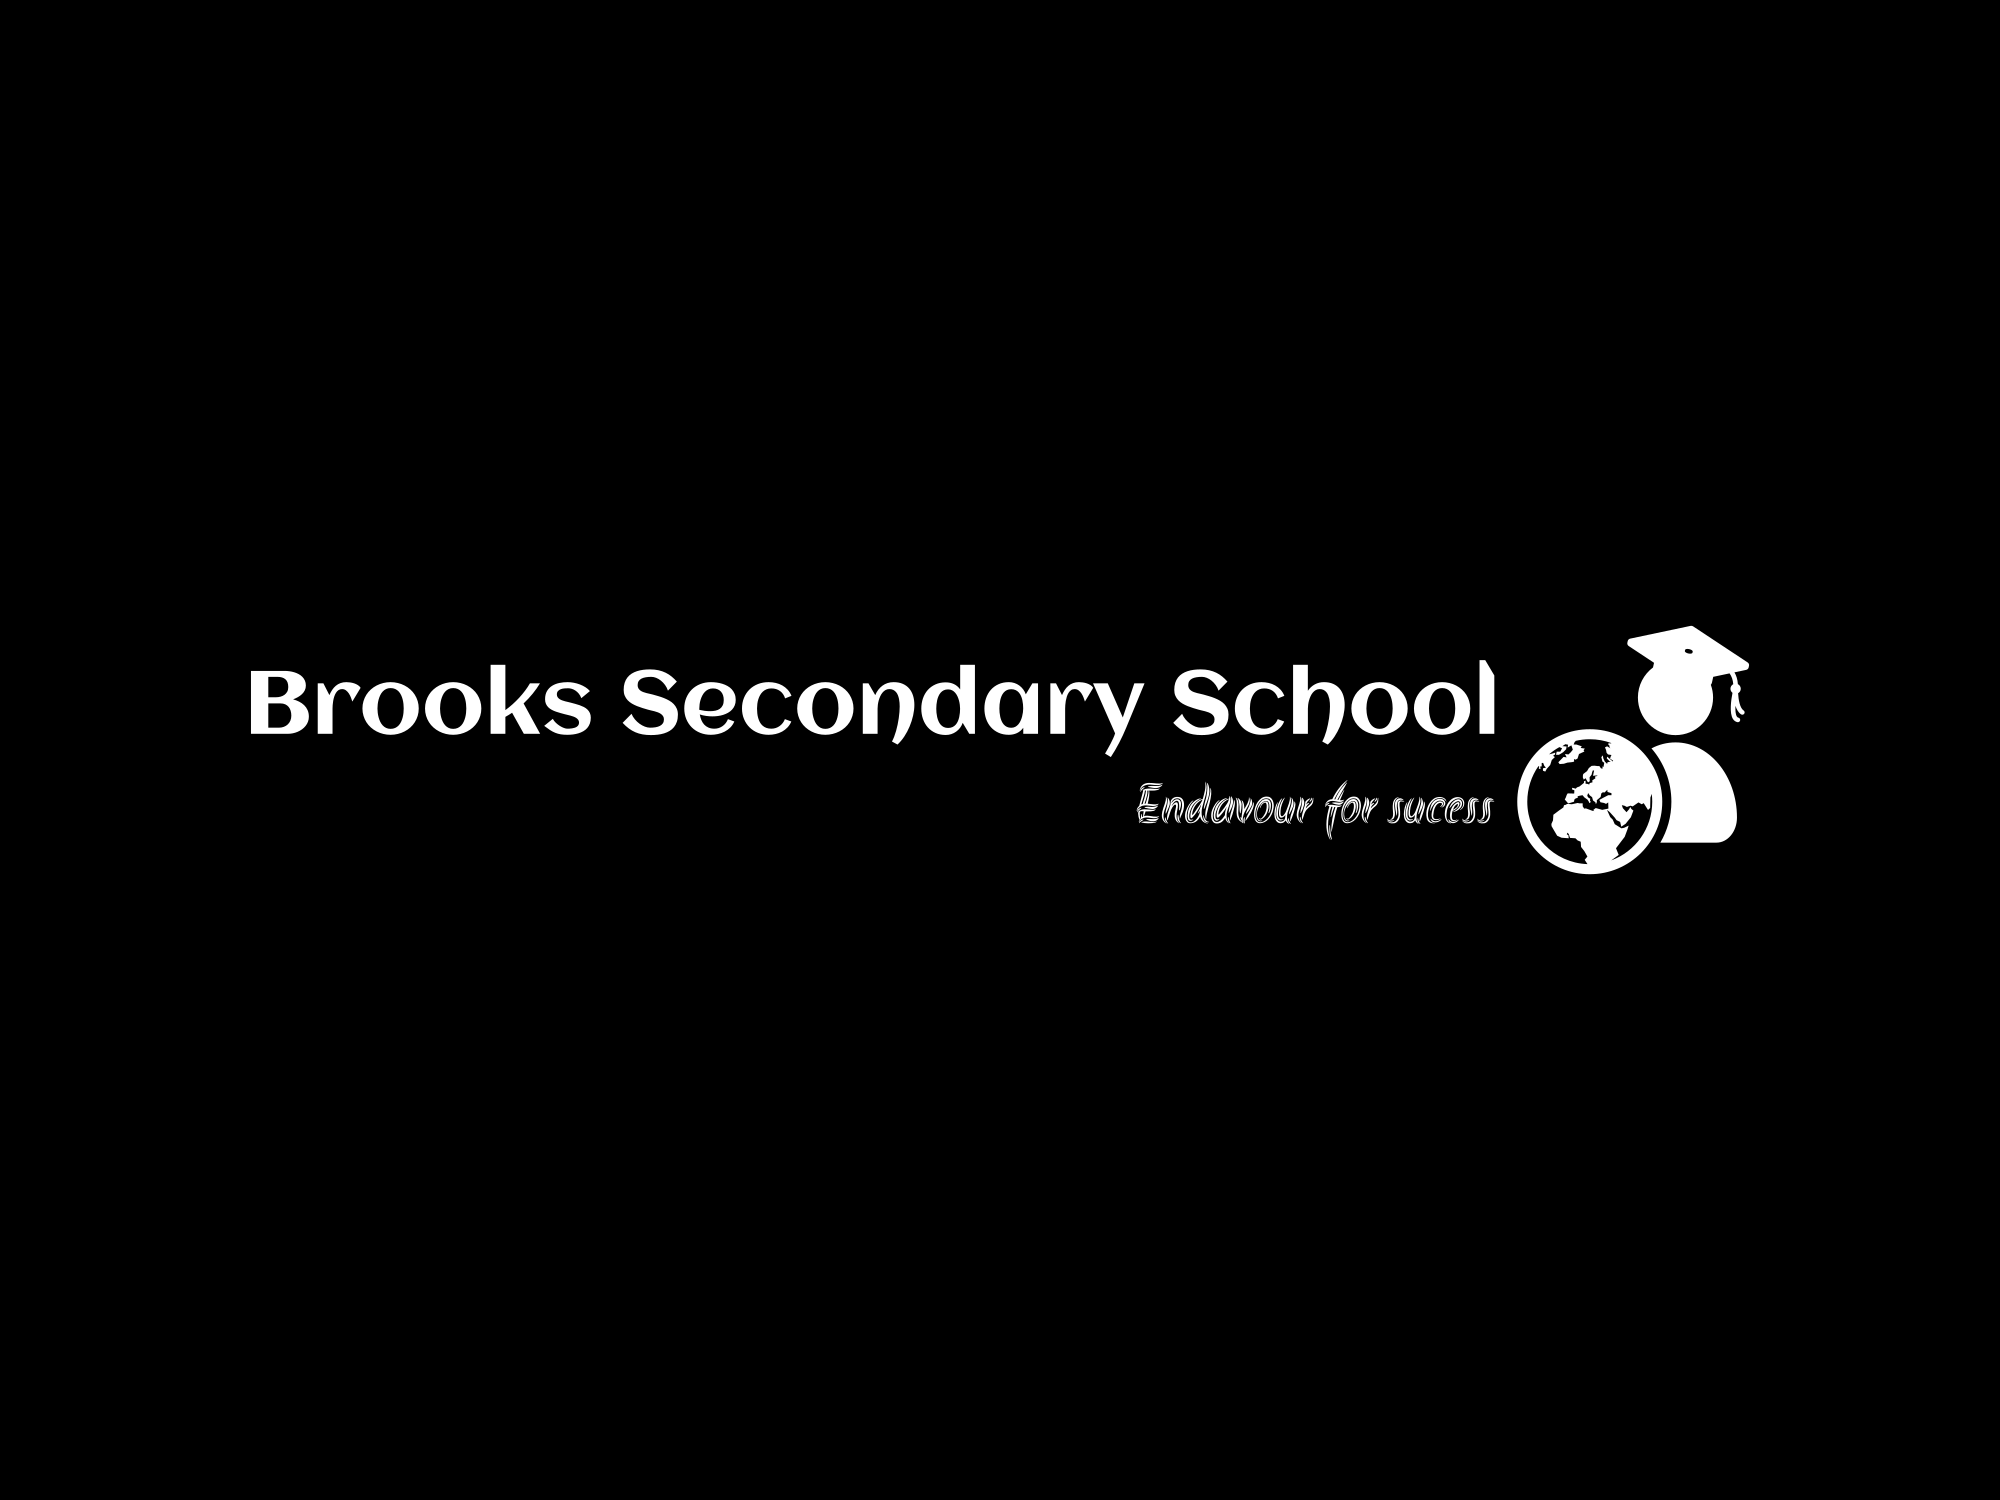 Brooks Secondary School